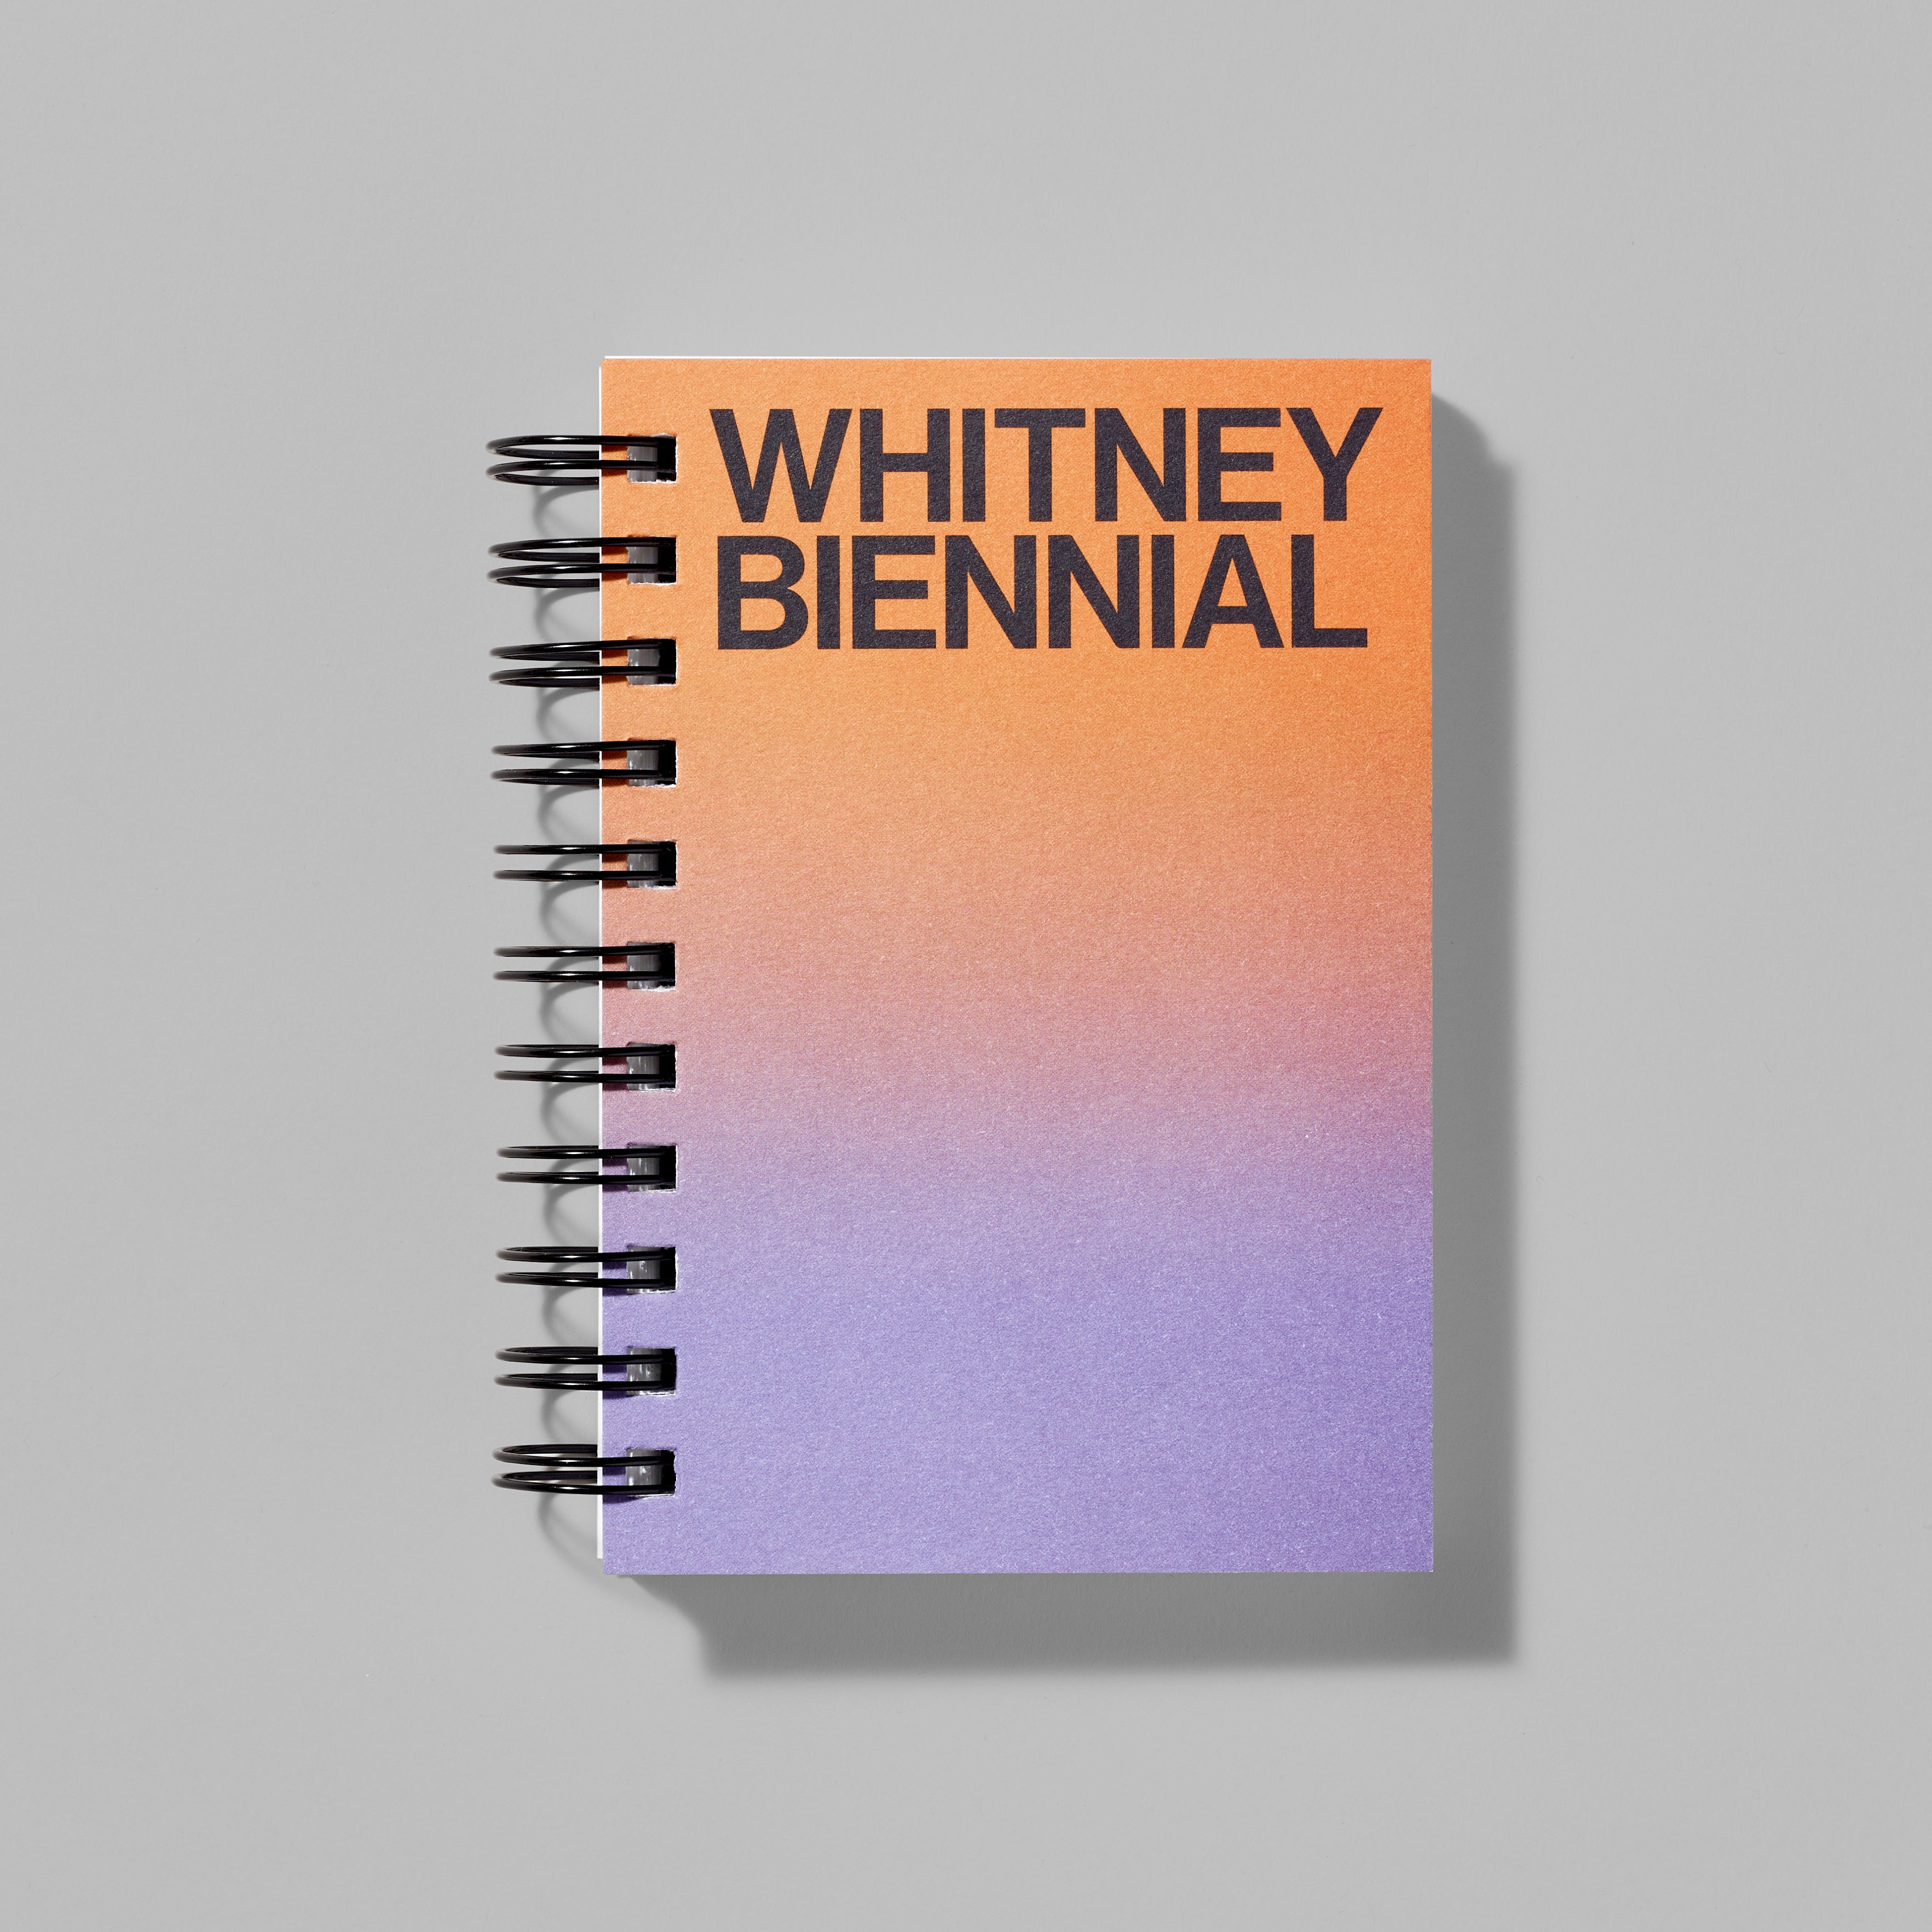 Purple and orange gradient spiral notebook featuring Whitney Biennial in black text